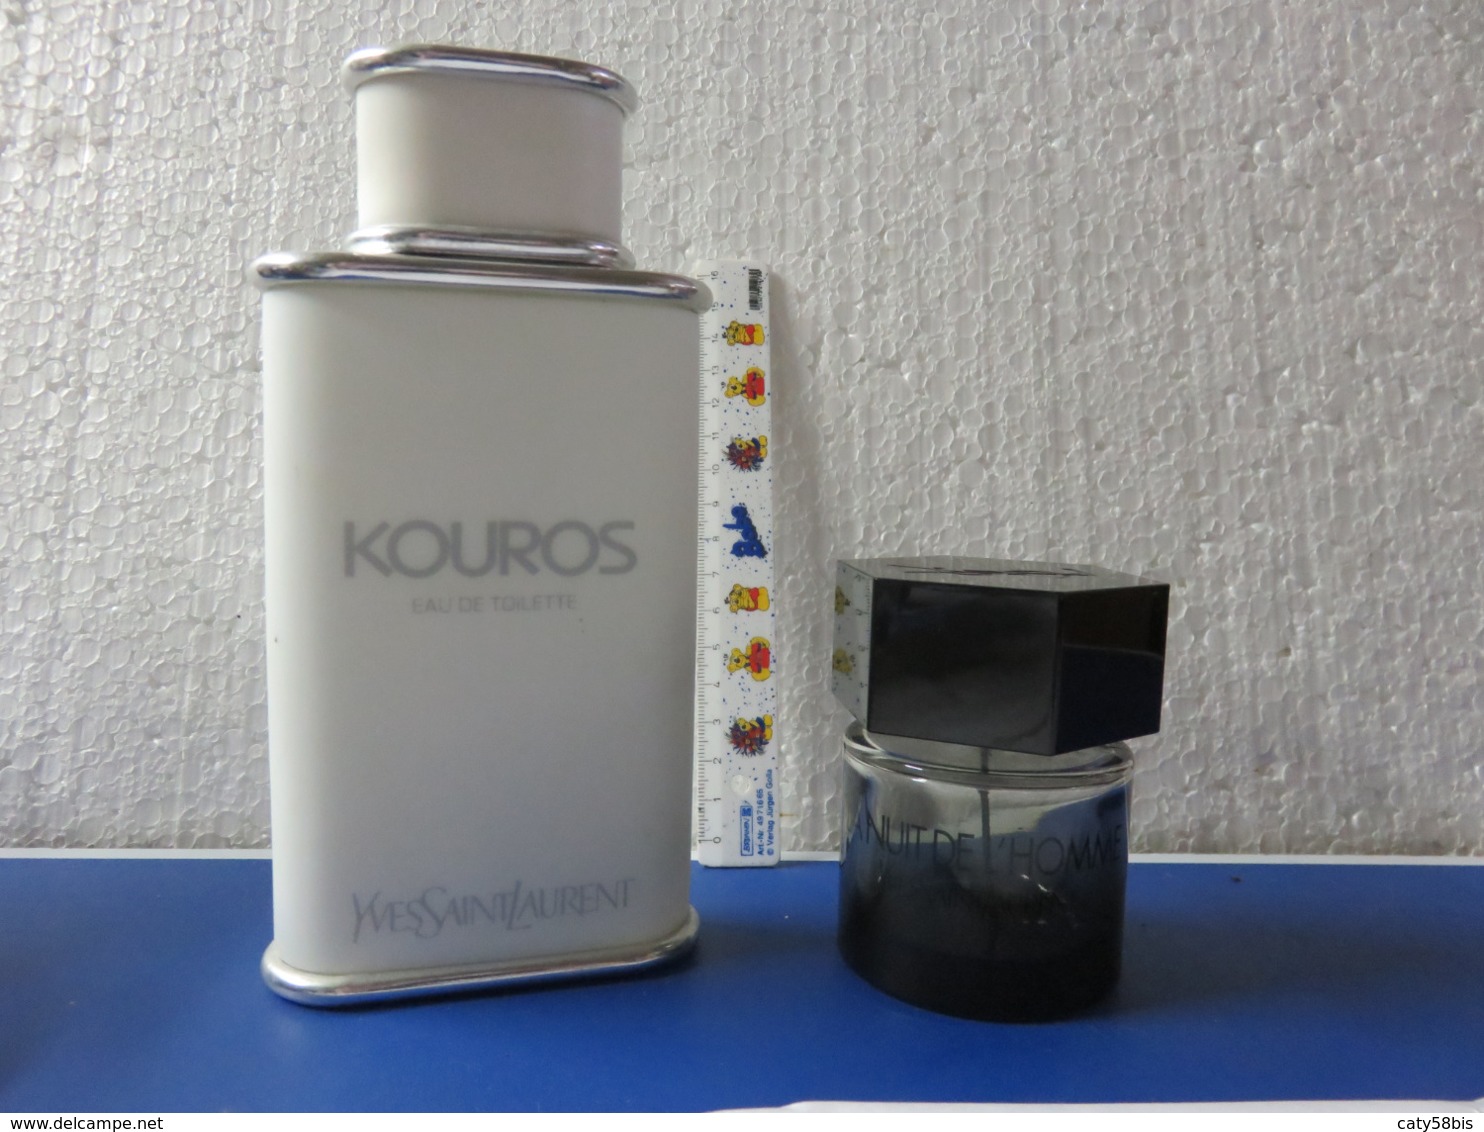 1flacon Kouros,1vapo YSL - Bottles (empty)